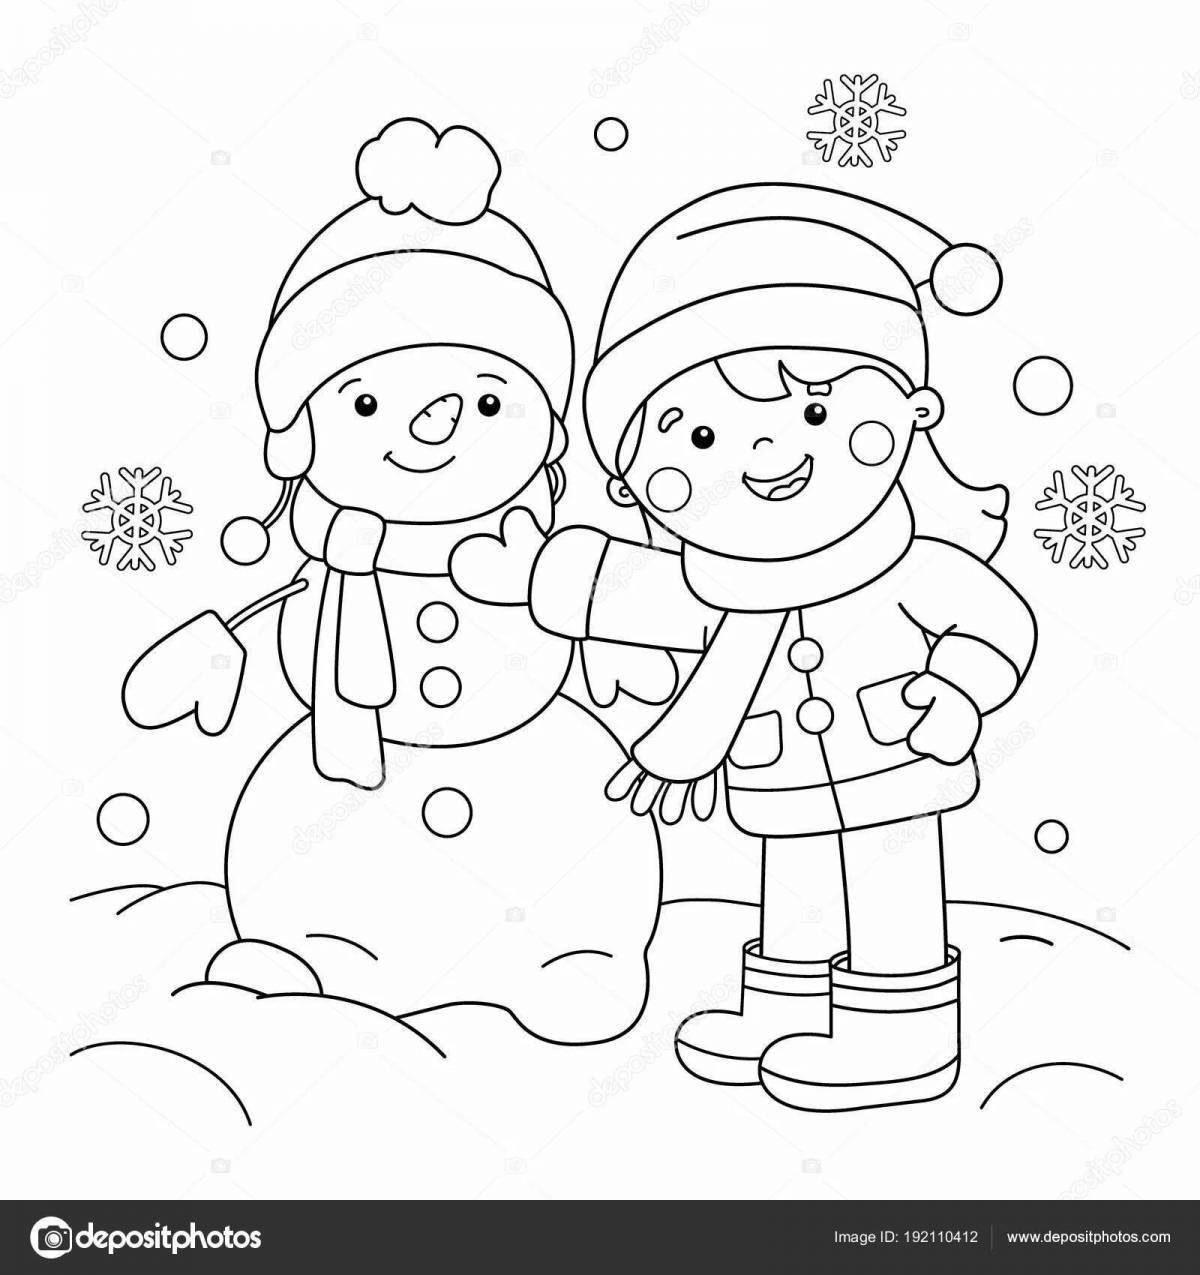 Joyful winter coloring for kids